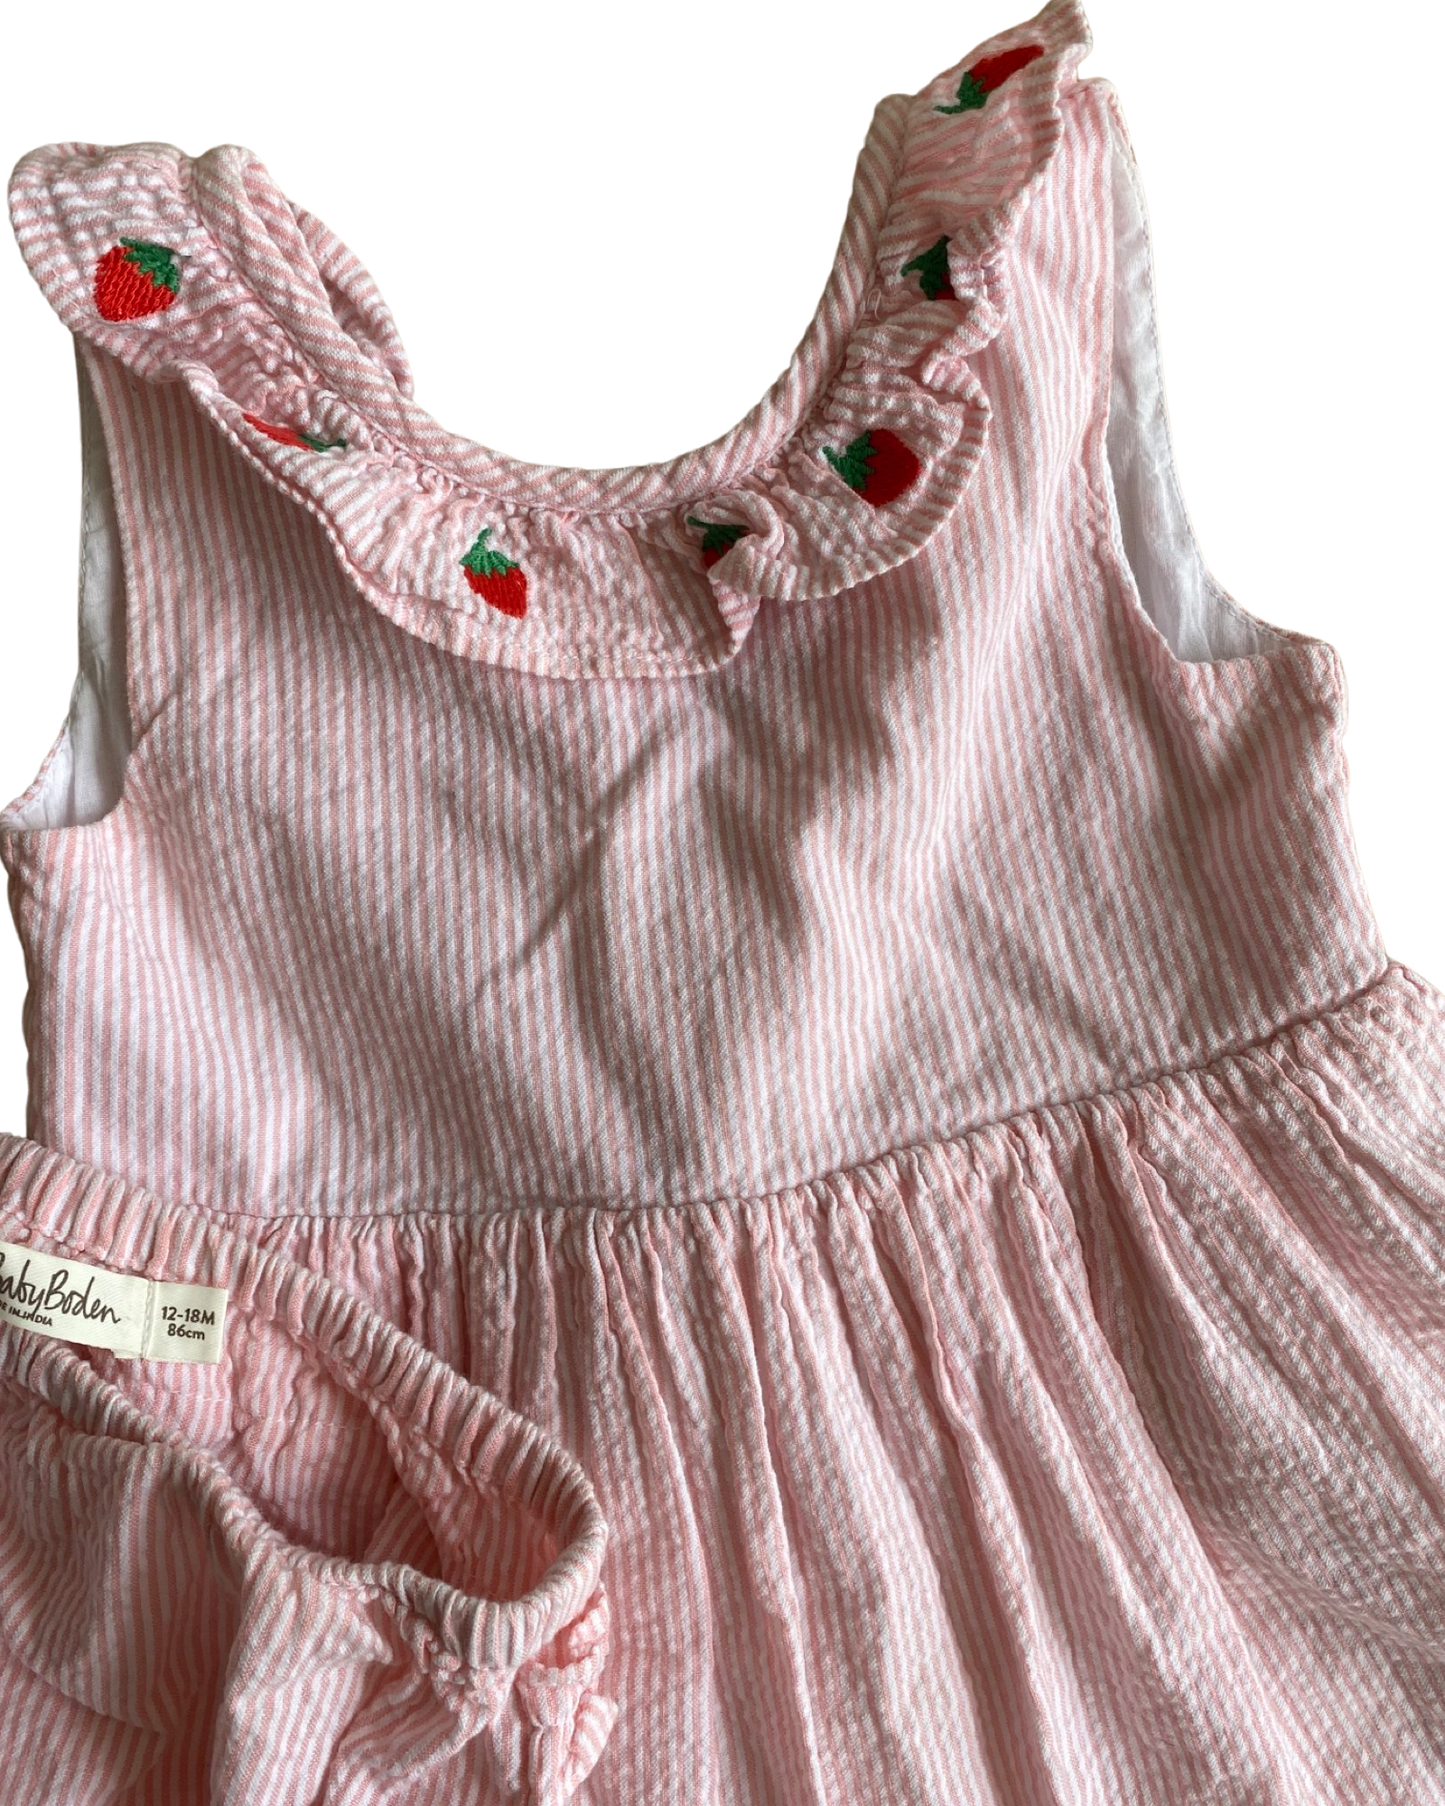 Baby Boden seersucker cotton dress with embroidered strawberries (12-18mths)